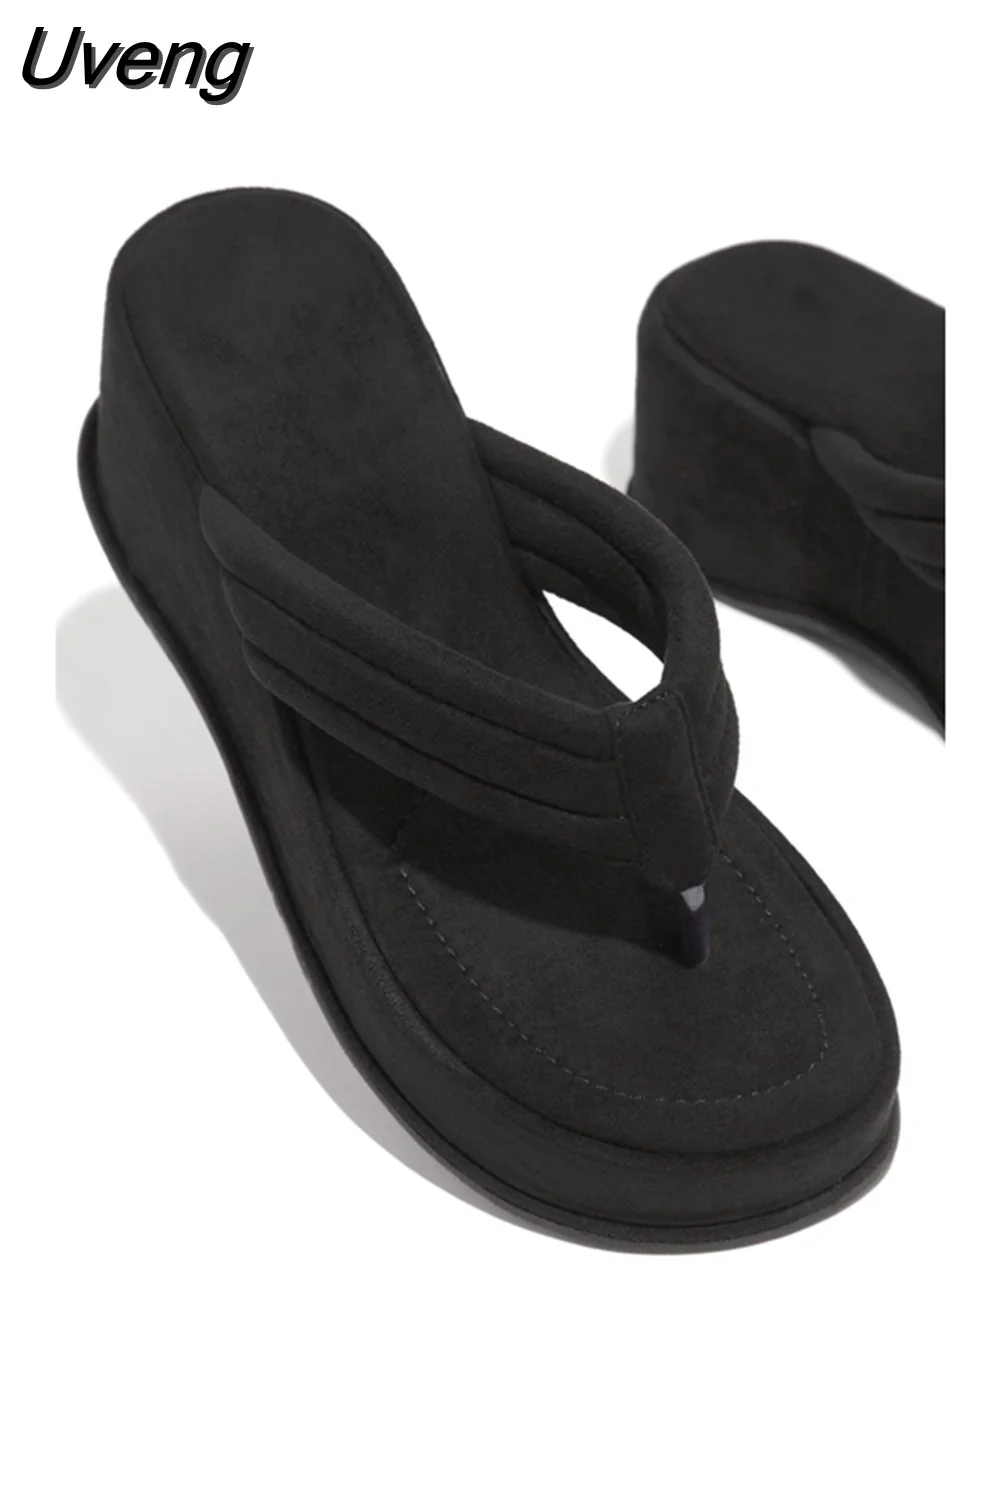 Uveng Wedges Sandals Summer Solid Color Casual Clip Toe Flip Flops Women Platform Slipper Beach Sandals Light Comfort Shoes 2023 420-0